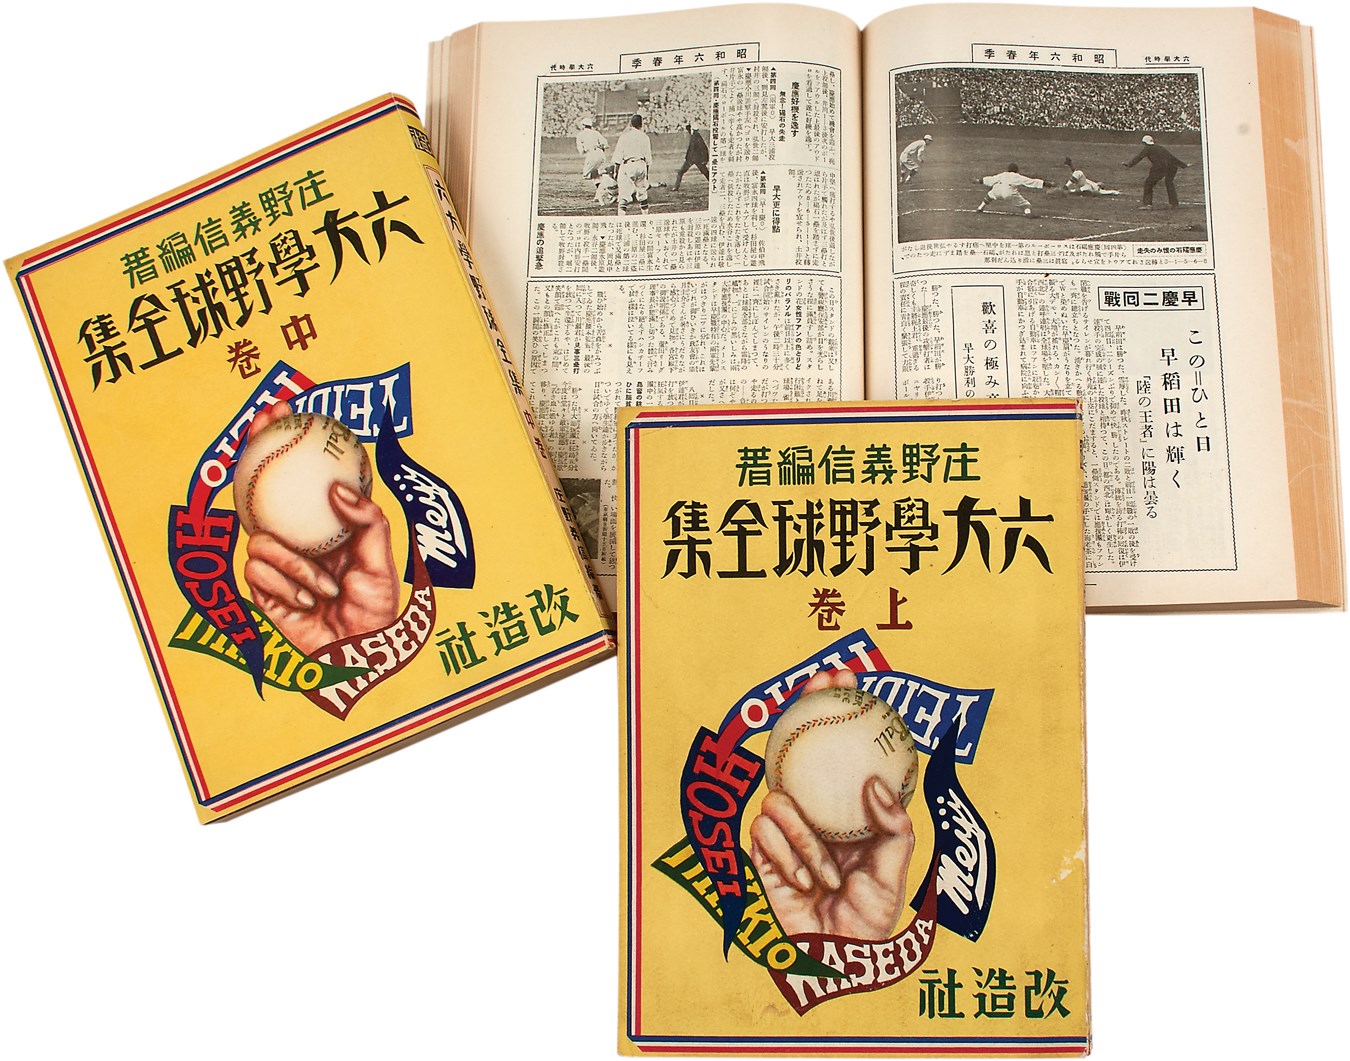 Negro League, Latin, Japanese & Int'l Baseball - 1931 Japanese Baseball "Big Six" Three Volume Book Set